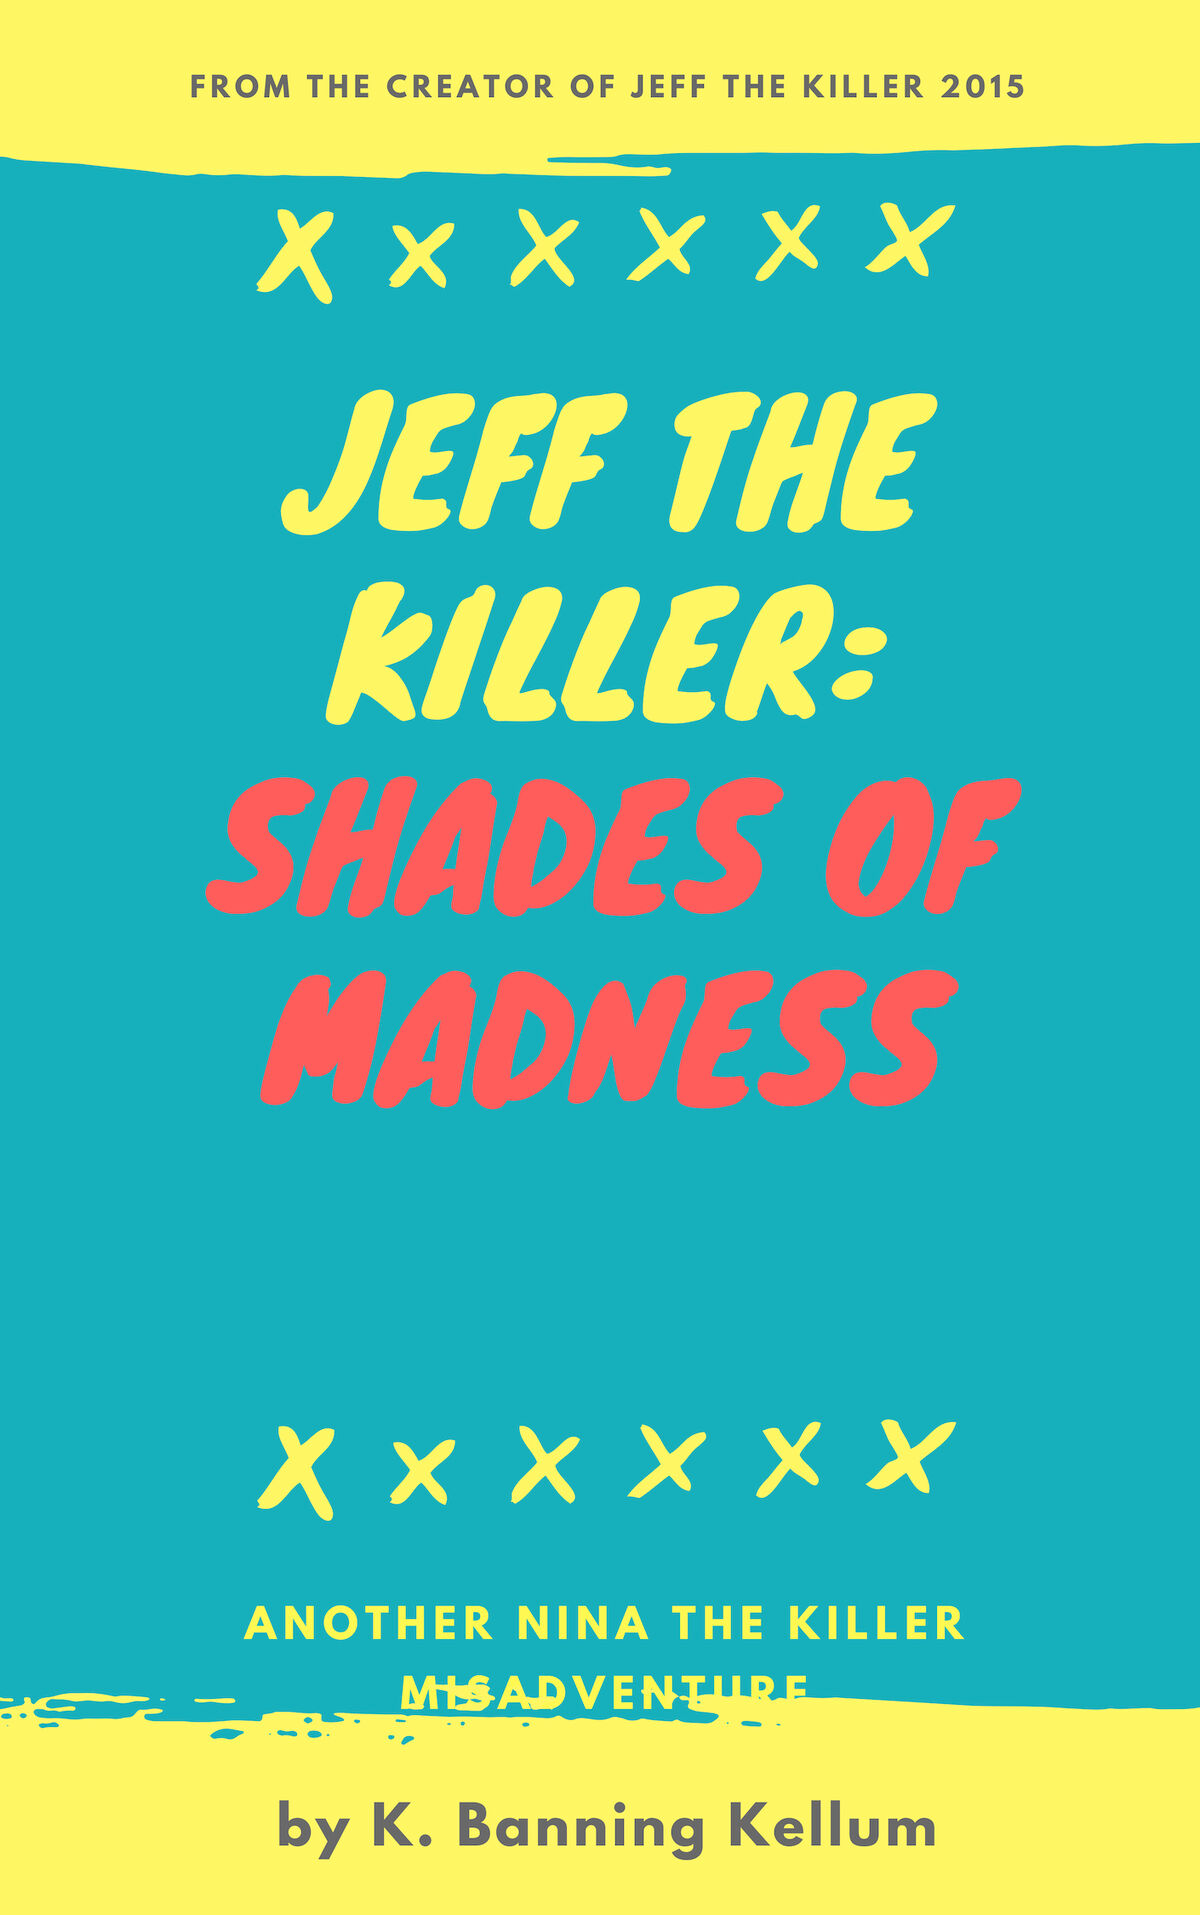 Jeff the killer REborn - Apps on Google Play